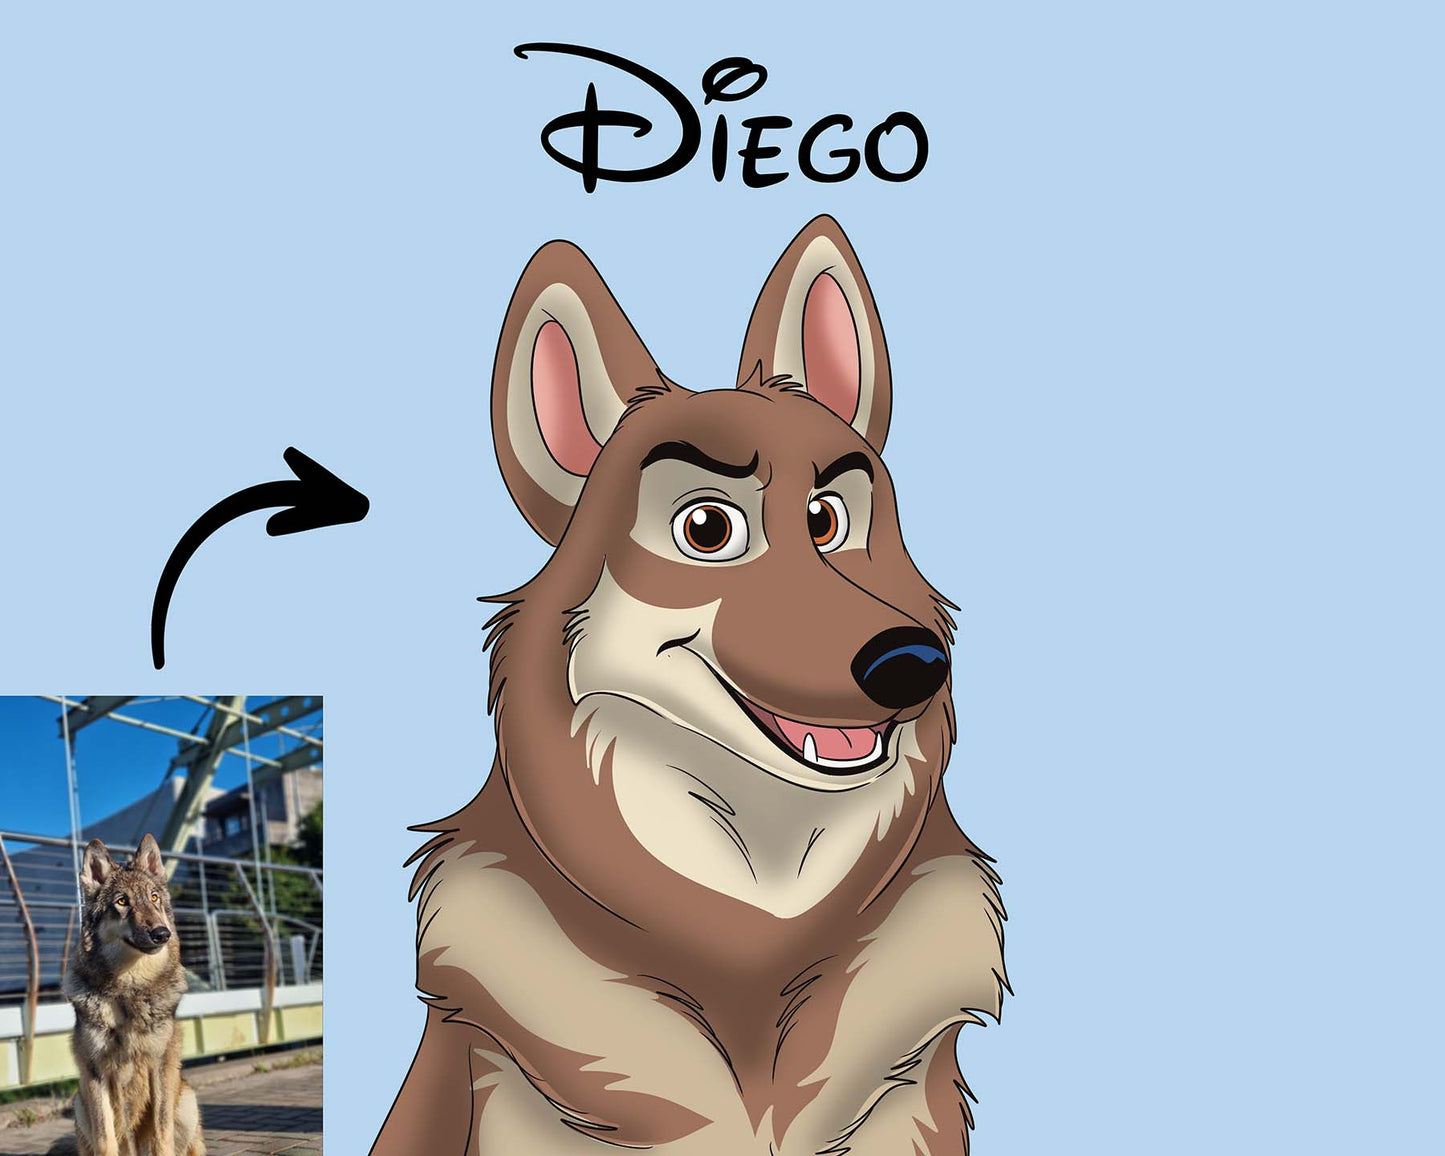 Disneyfy Pet Cartoon Hand Drawn Portrait